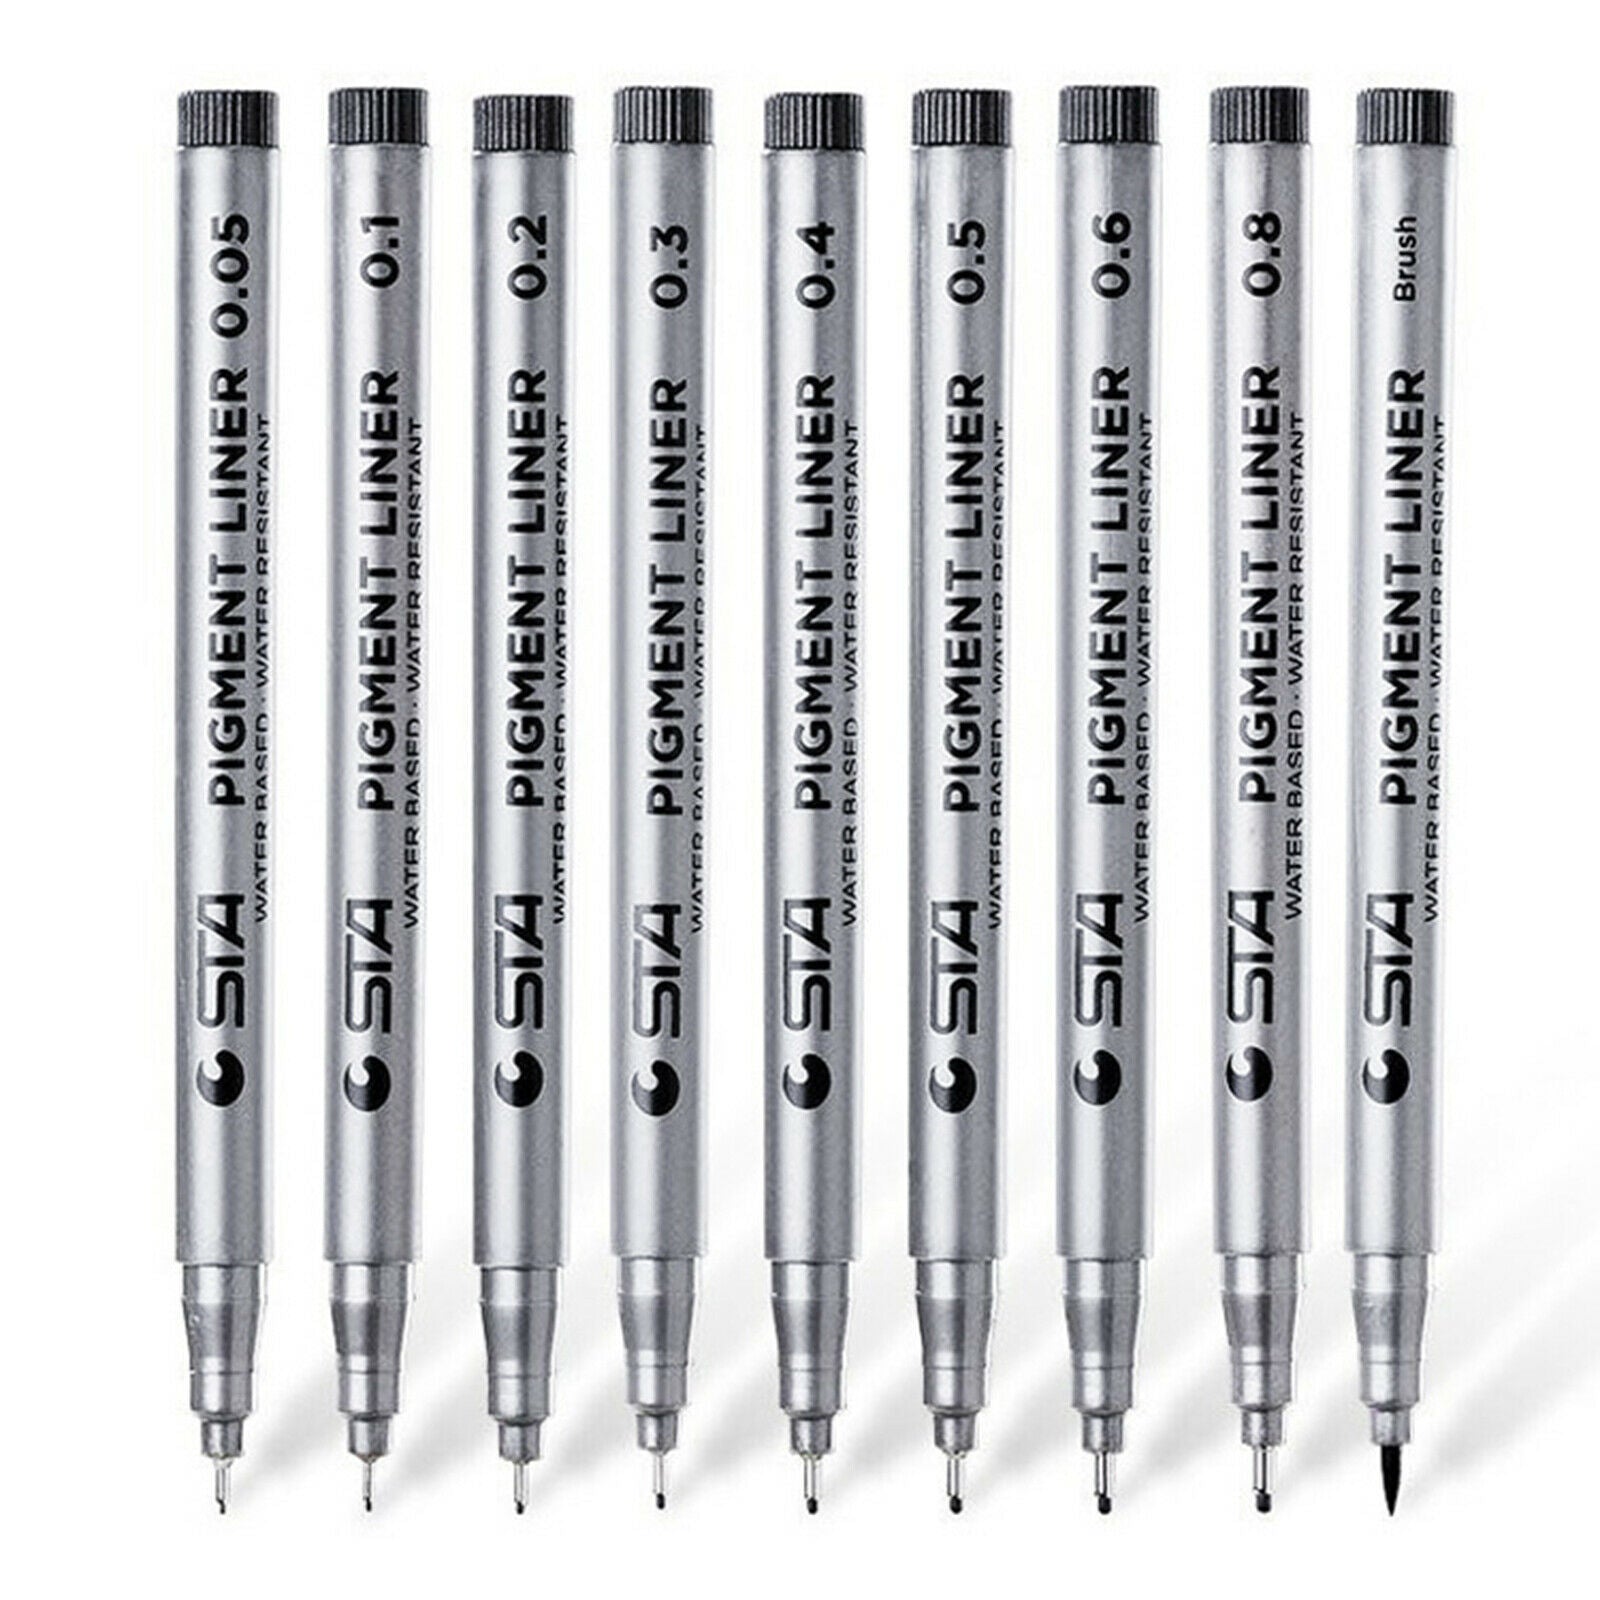 Precision Micro-Line Pens Pigment Ink Pens Doodling Sketching Scrapbooking